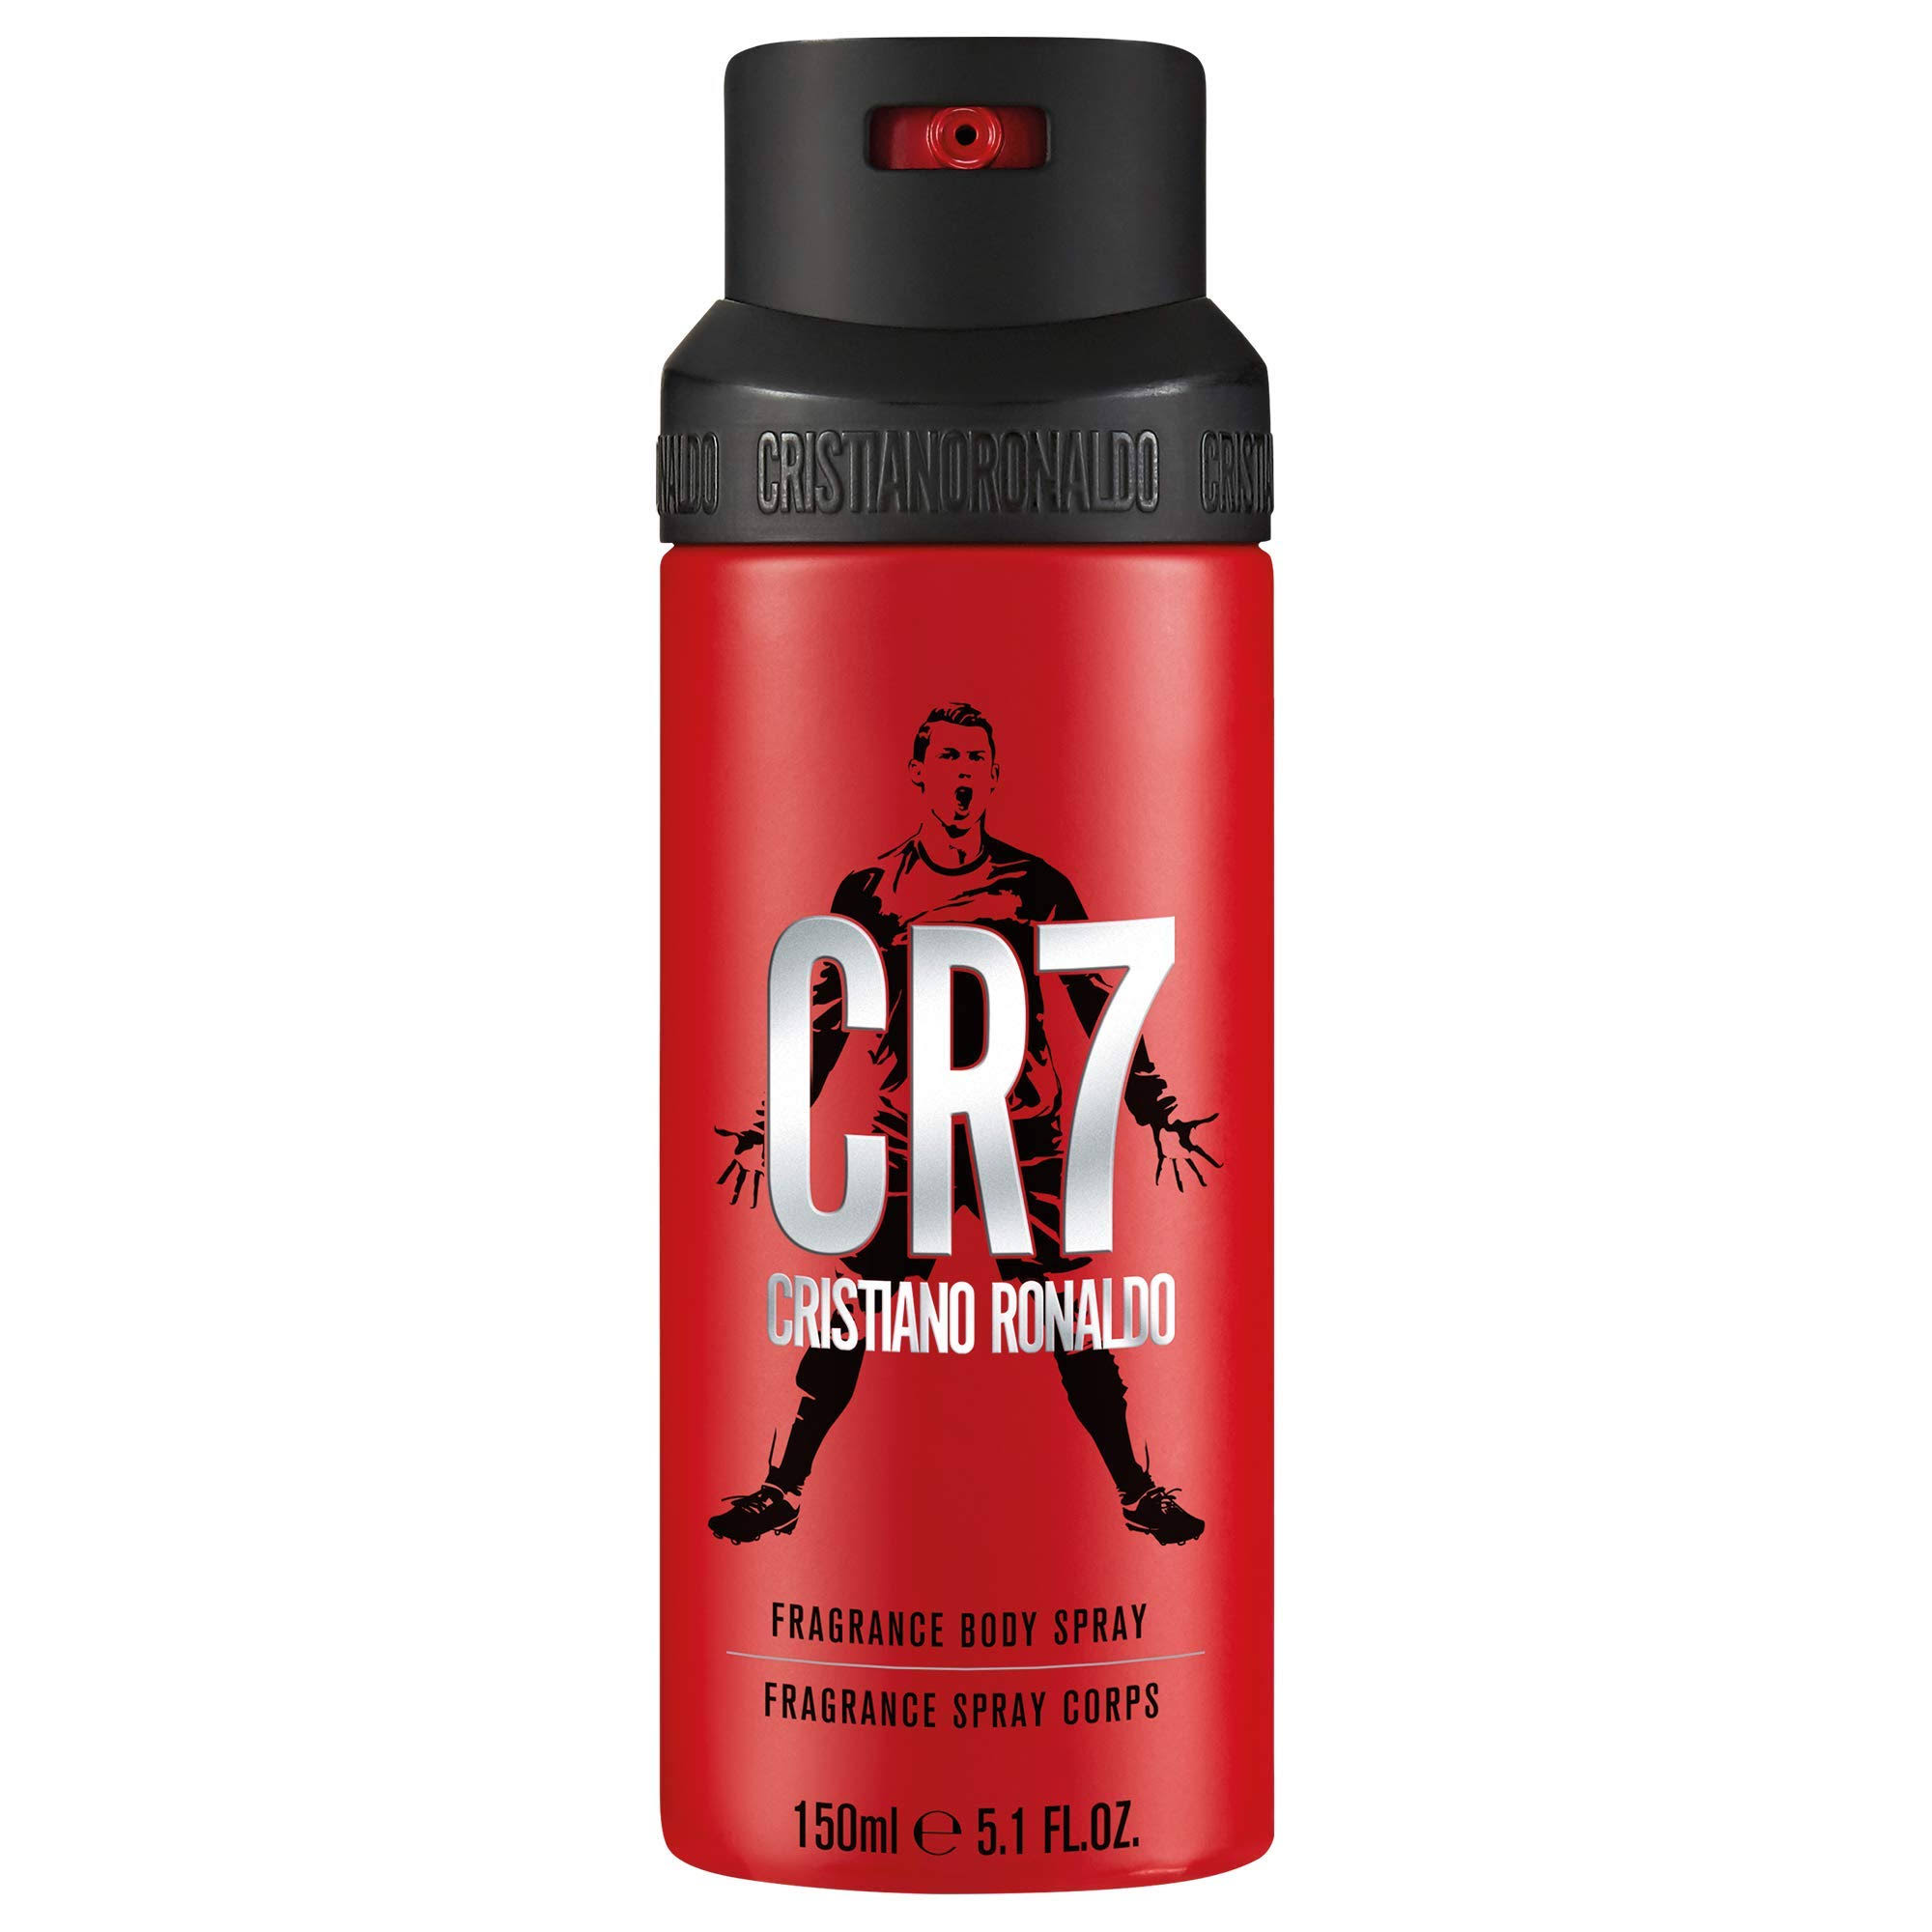 Cristiano Ronaldo CR7 Body Spray, 150 ml